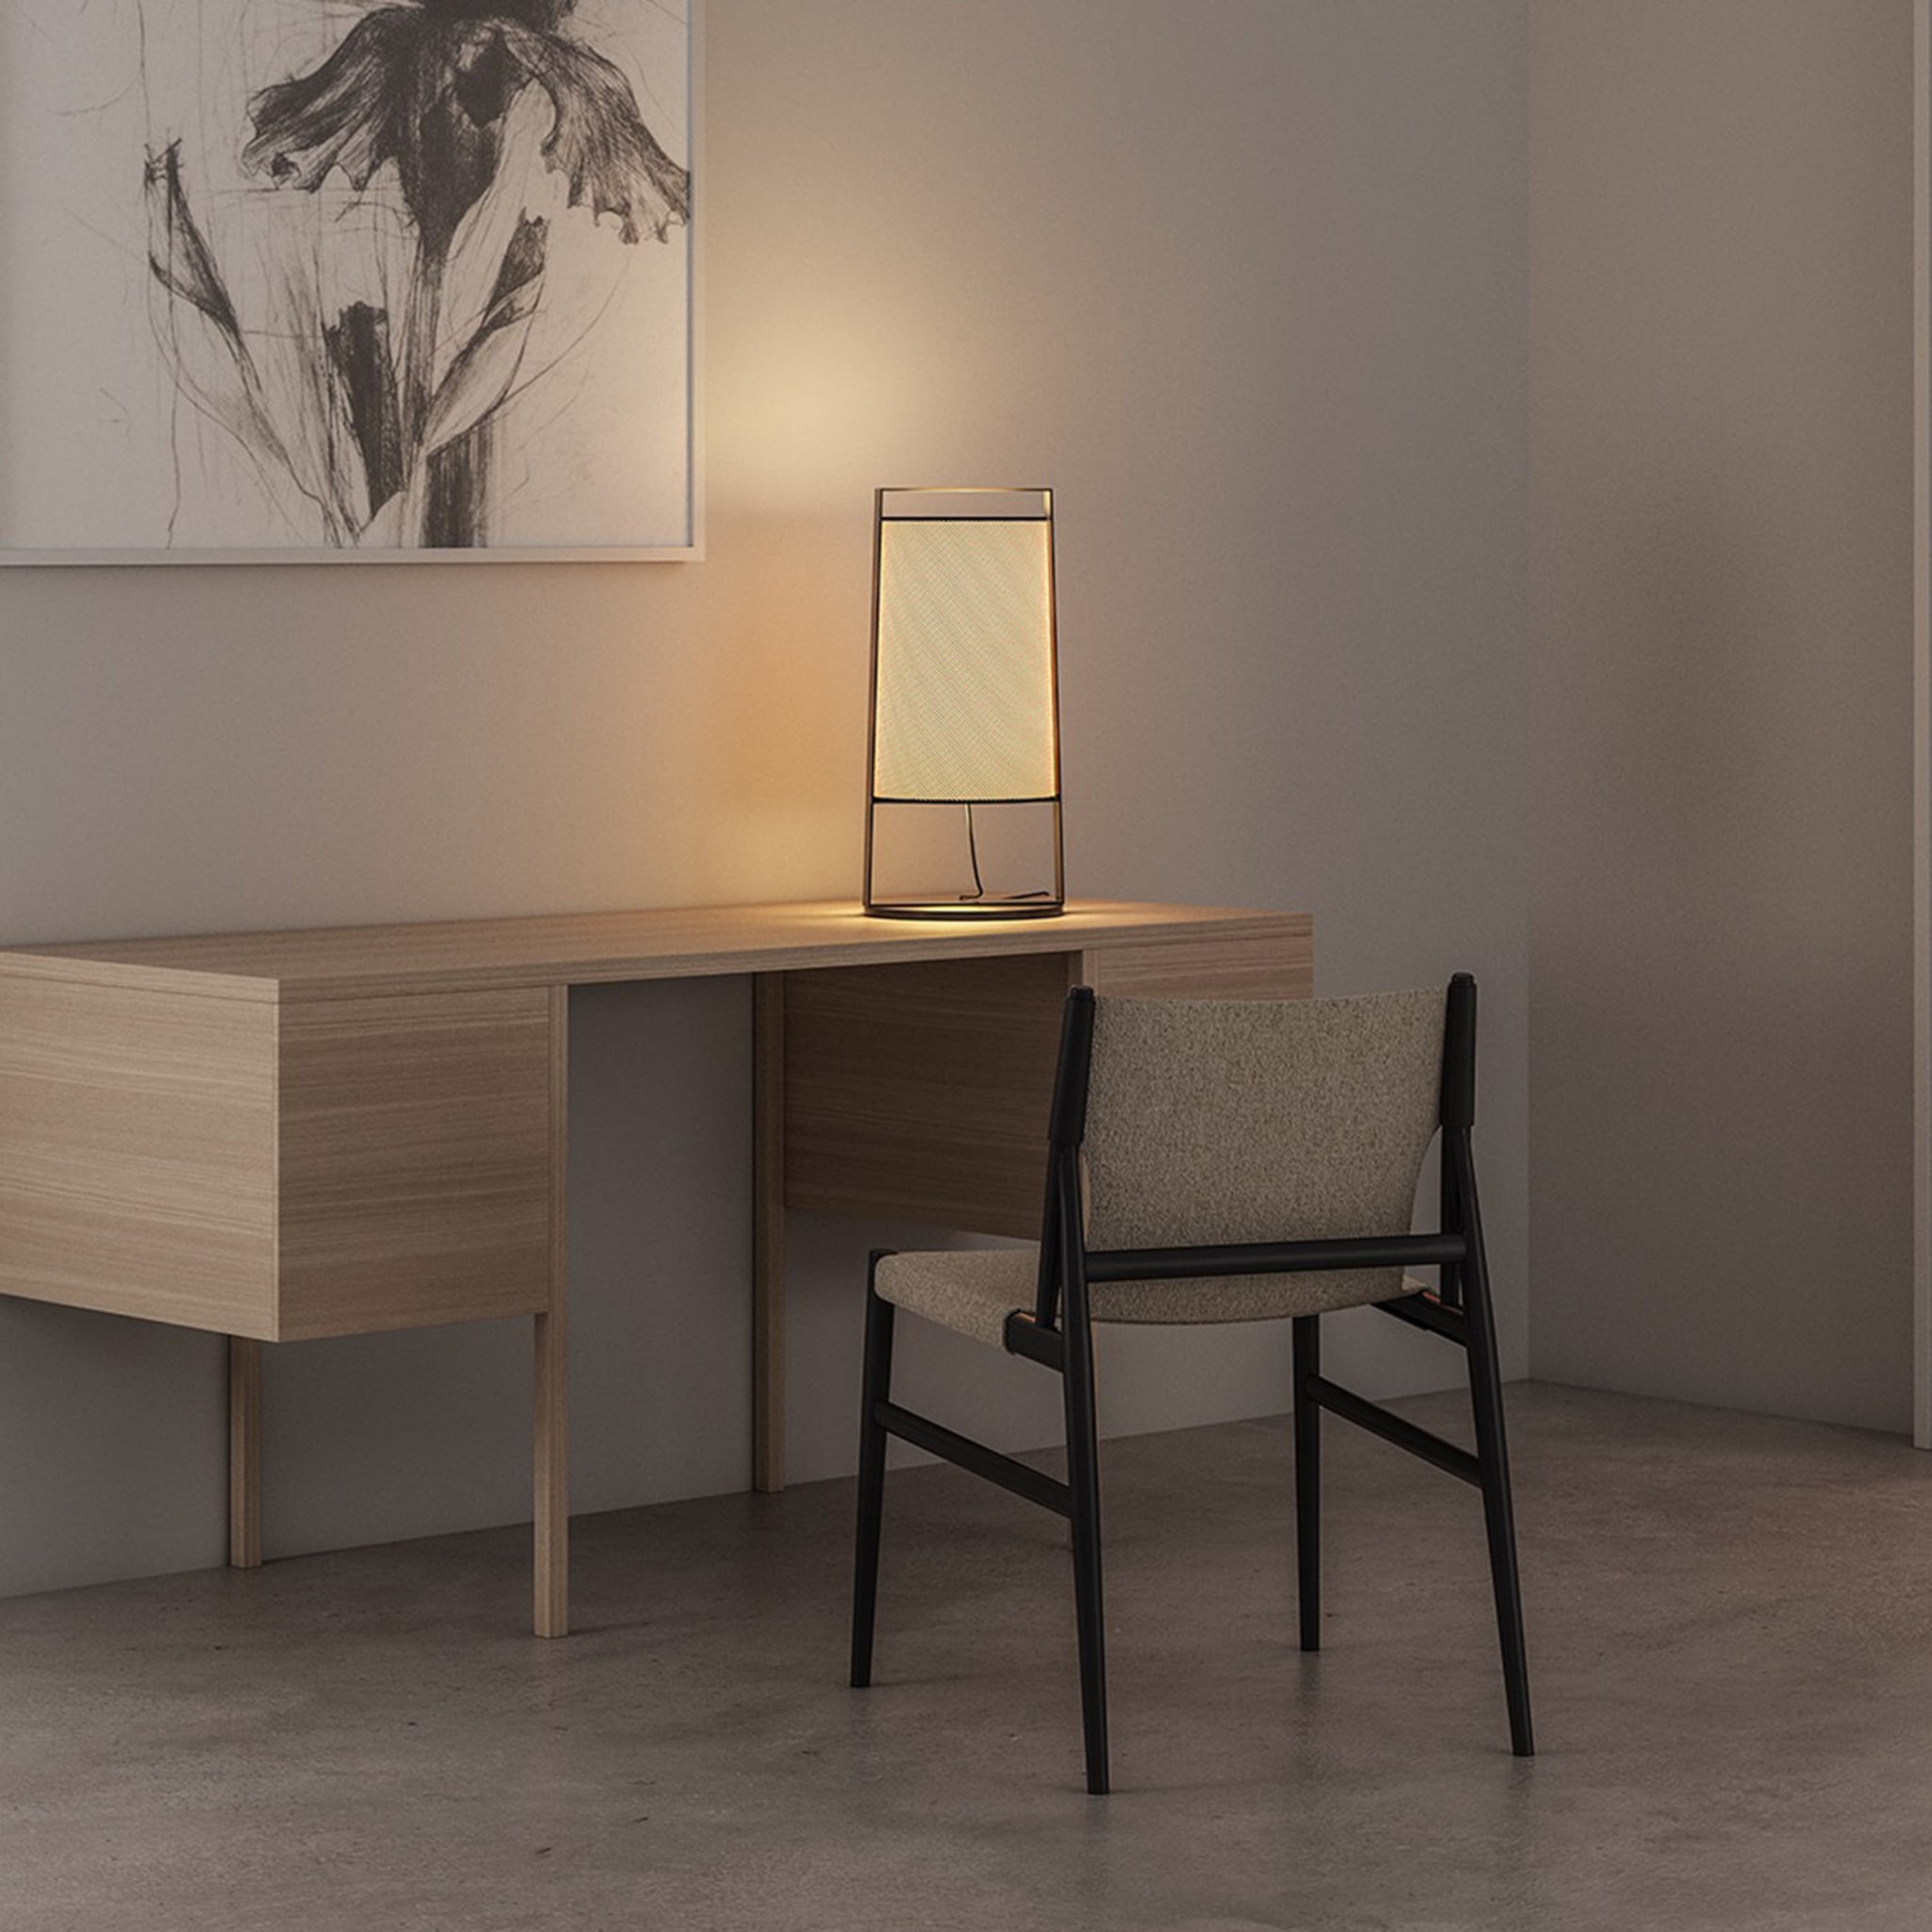 Macao Beige Table Lamp by Corrado Dotti - Alternative view 1